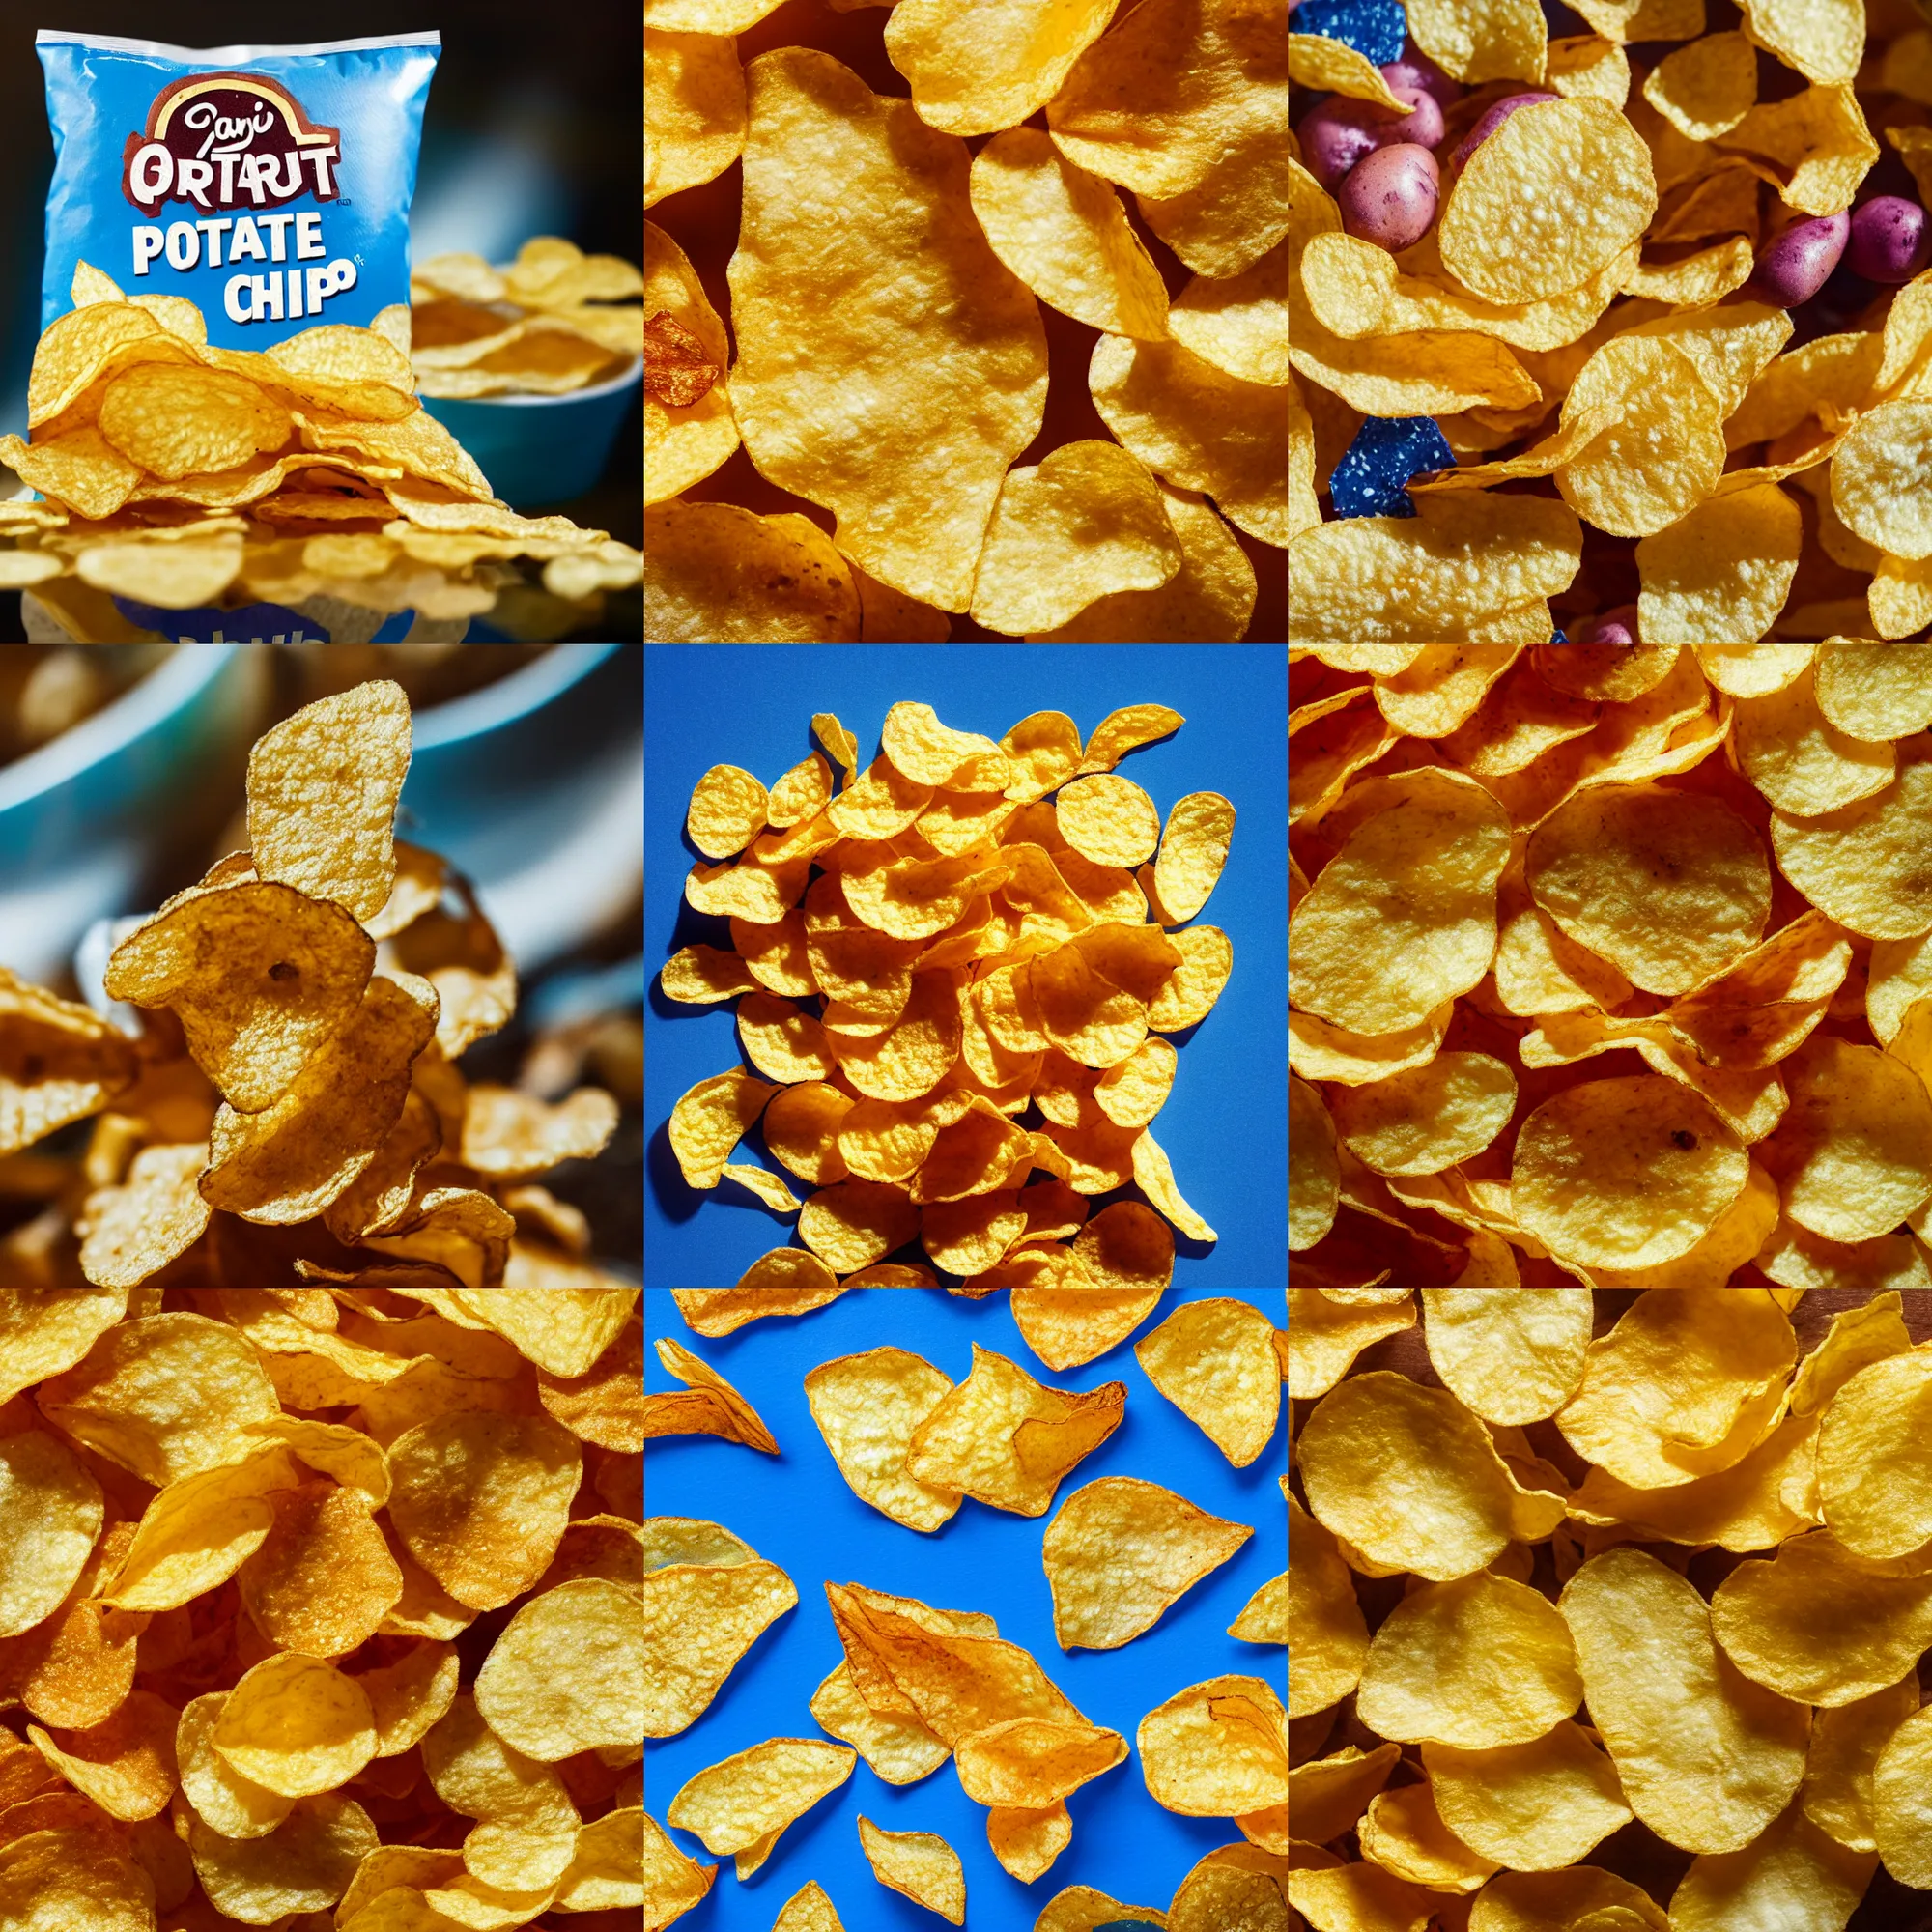 Prompt: chris pratt as potato chips, crisps, macro shot, high detail photo, close up, cute, adorable